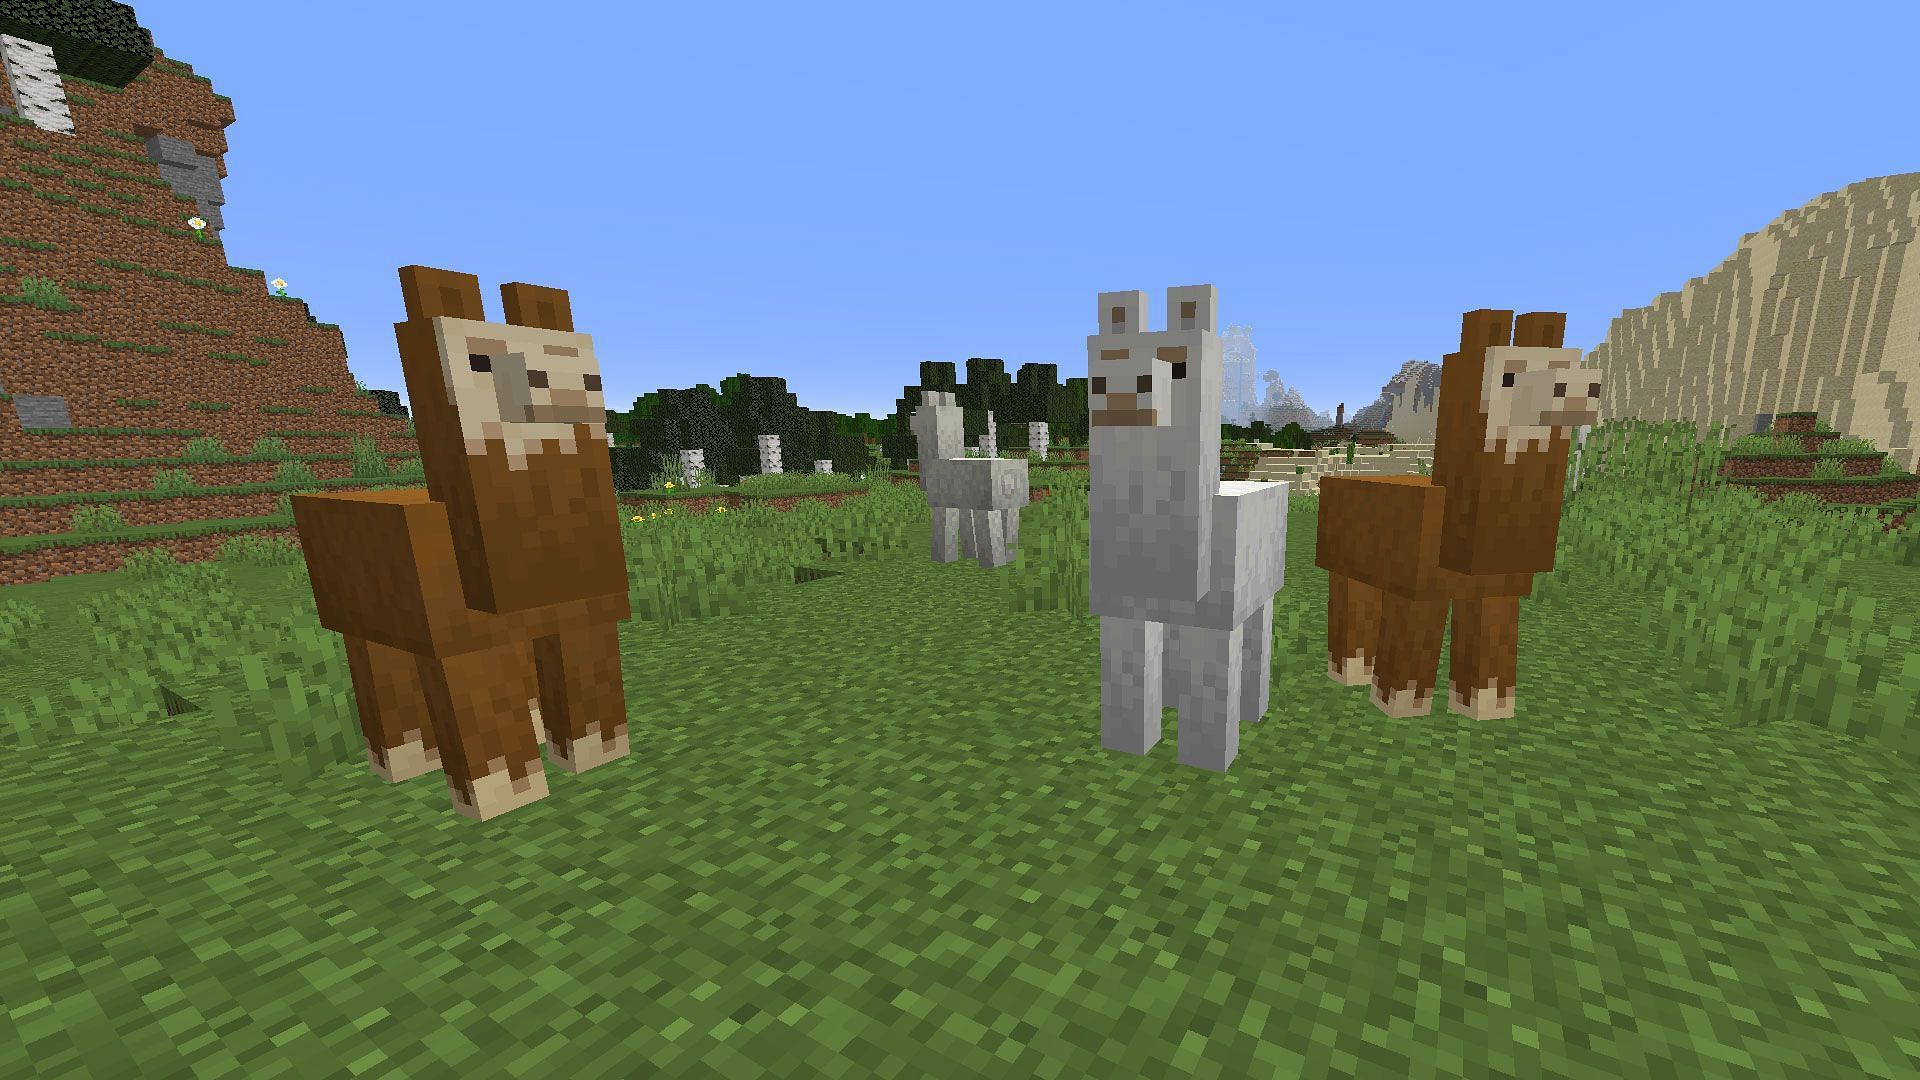 Llamas on a hill (Image via Minecraft)